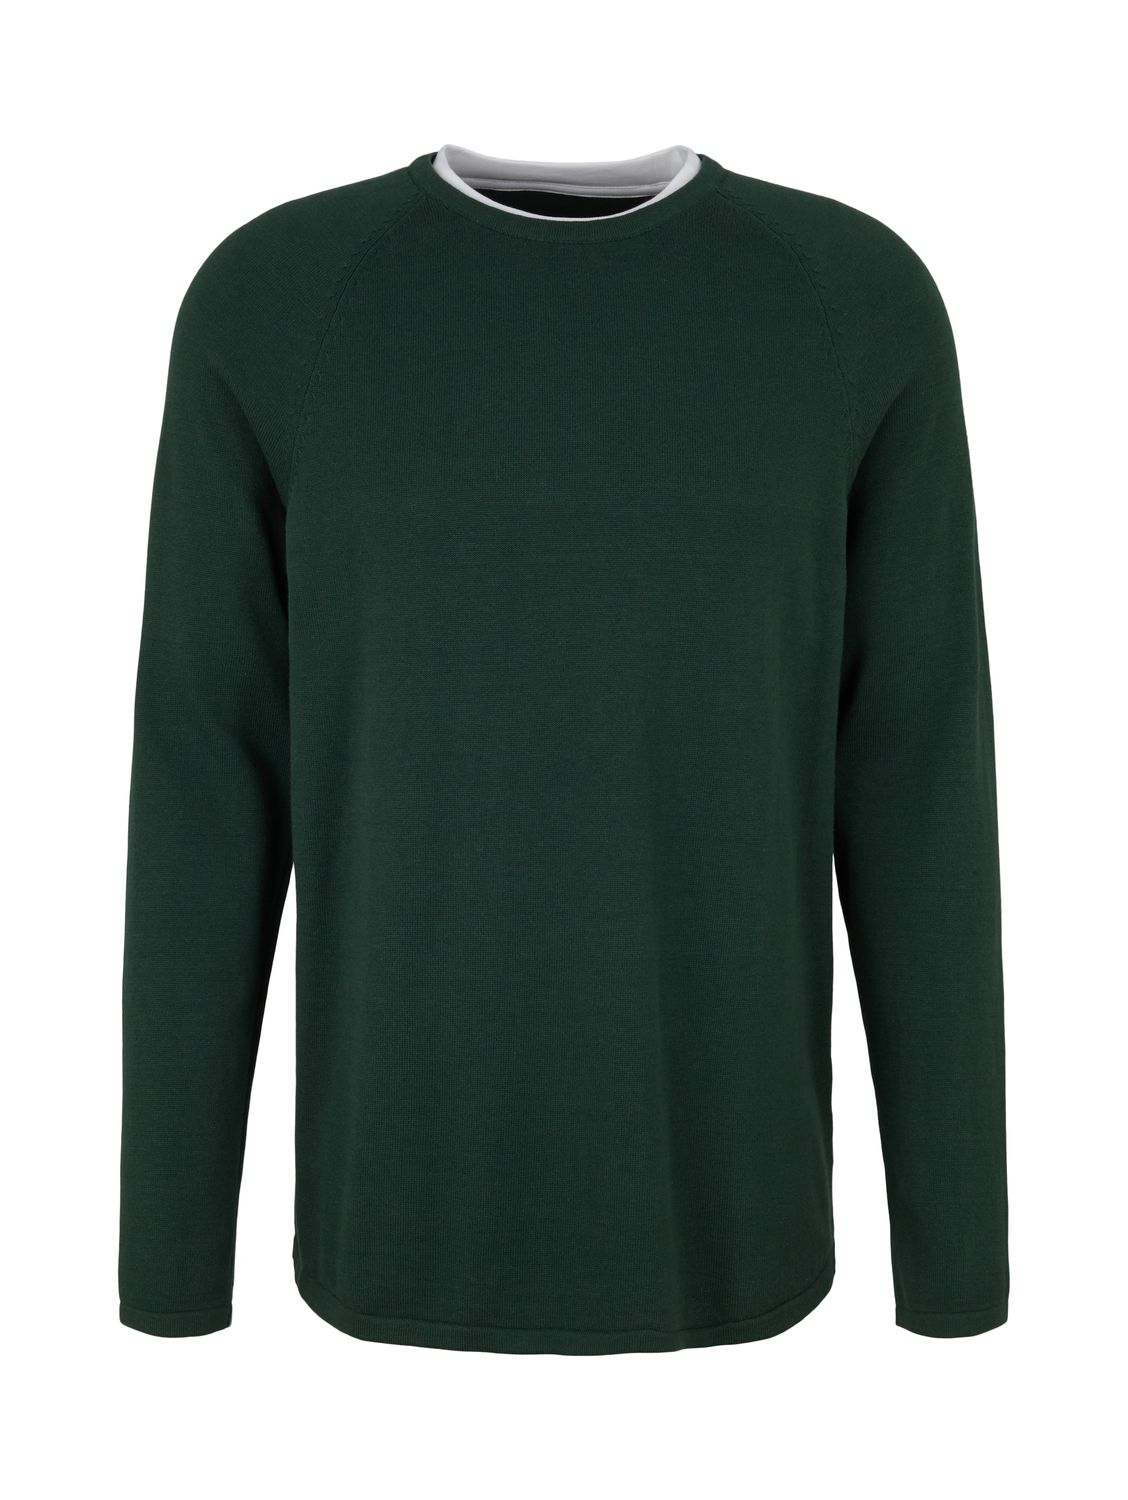 Пуловер TOM TAILOR Denim BASIC, зеленый куртка tom tailor размер xxl зеленый